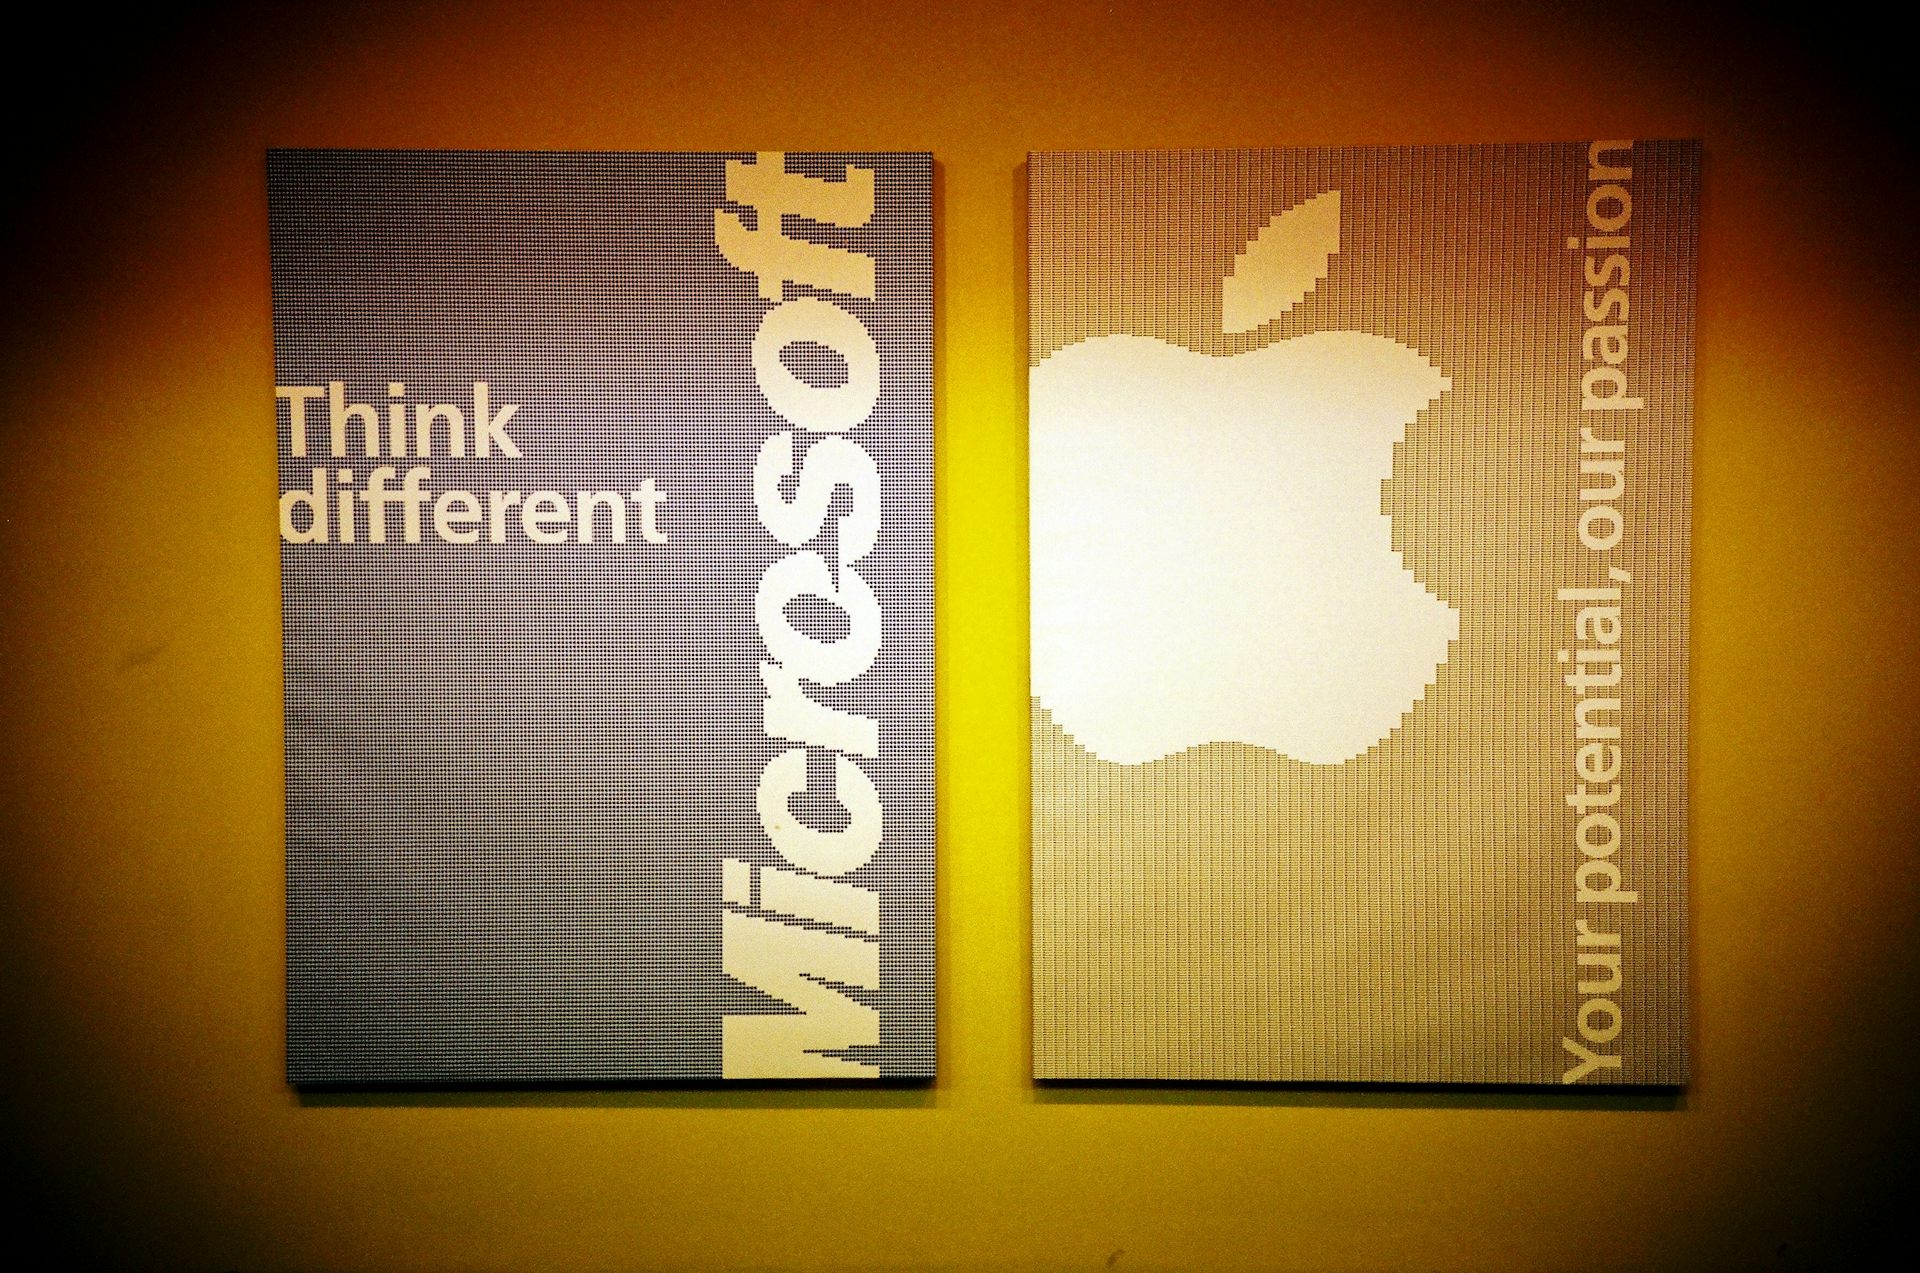 windows 10 vs mac os virus